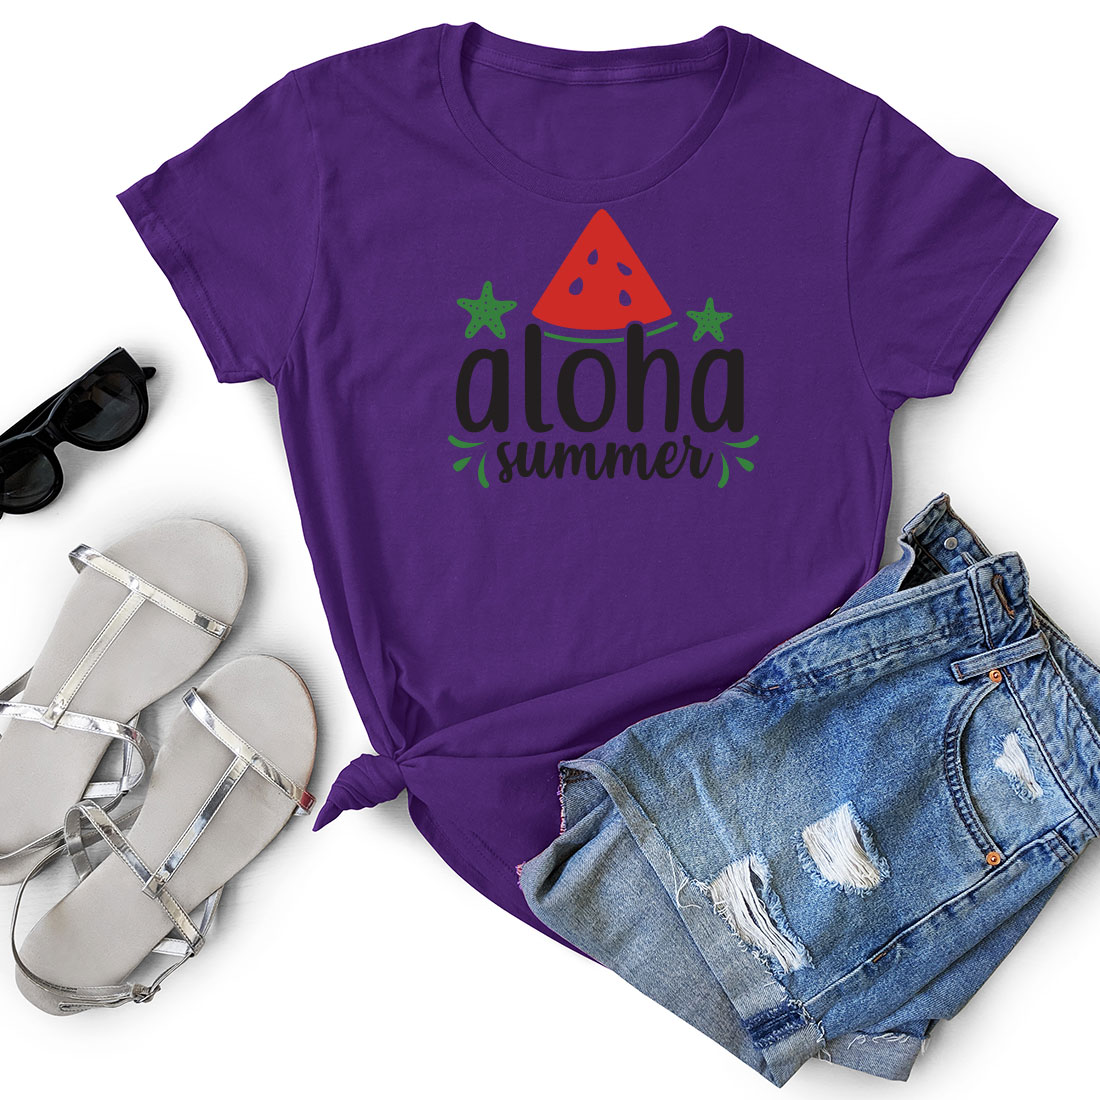 Purple shirt with the word aloha on it.